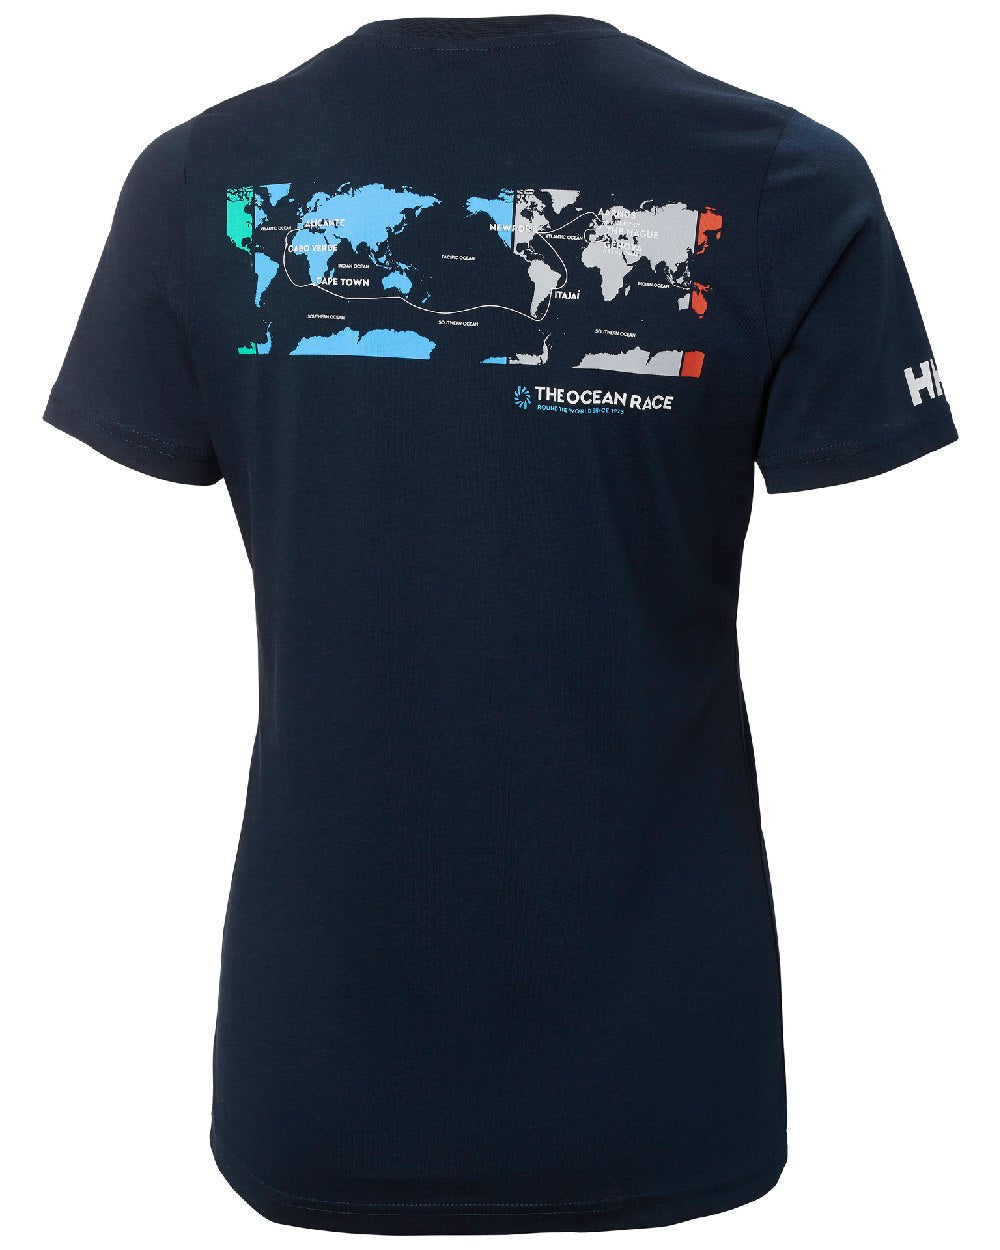 Navy lv coloured Helly Hansen Womens Ocean Race T-Shirt on white background 